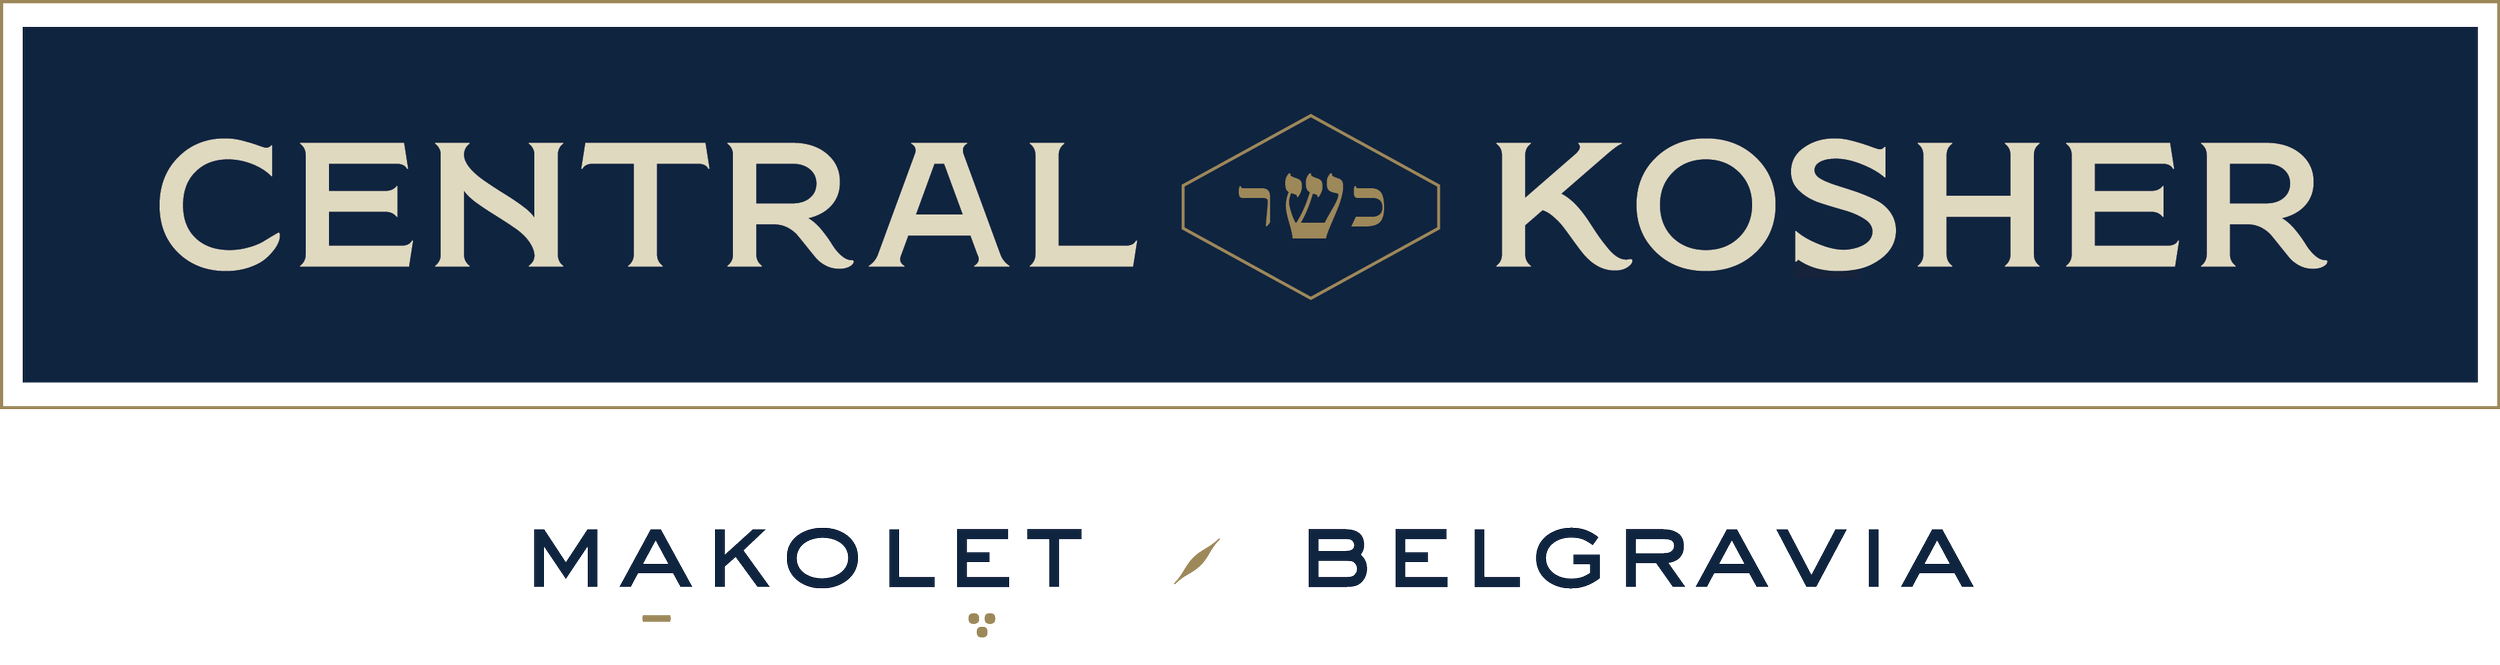 Central+Kosher+logo+2